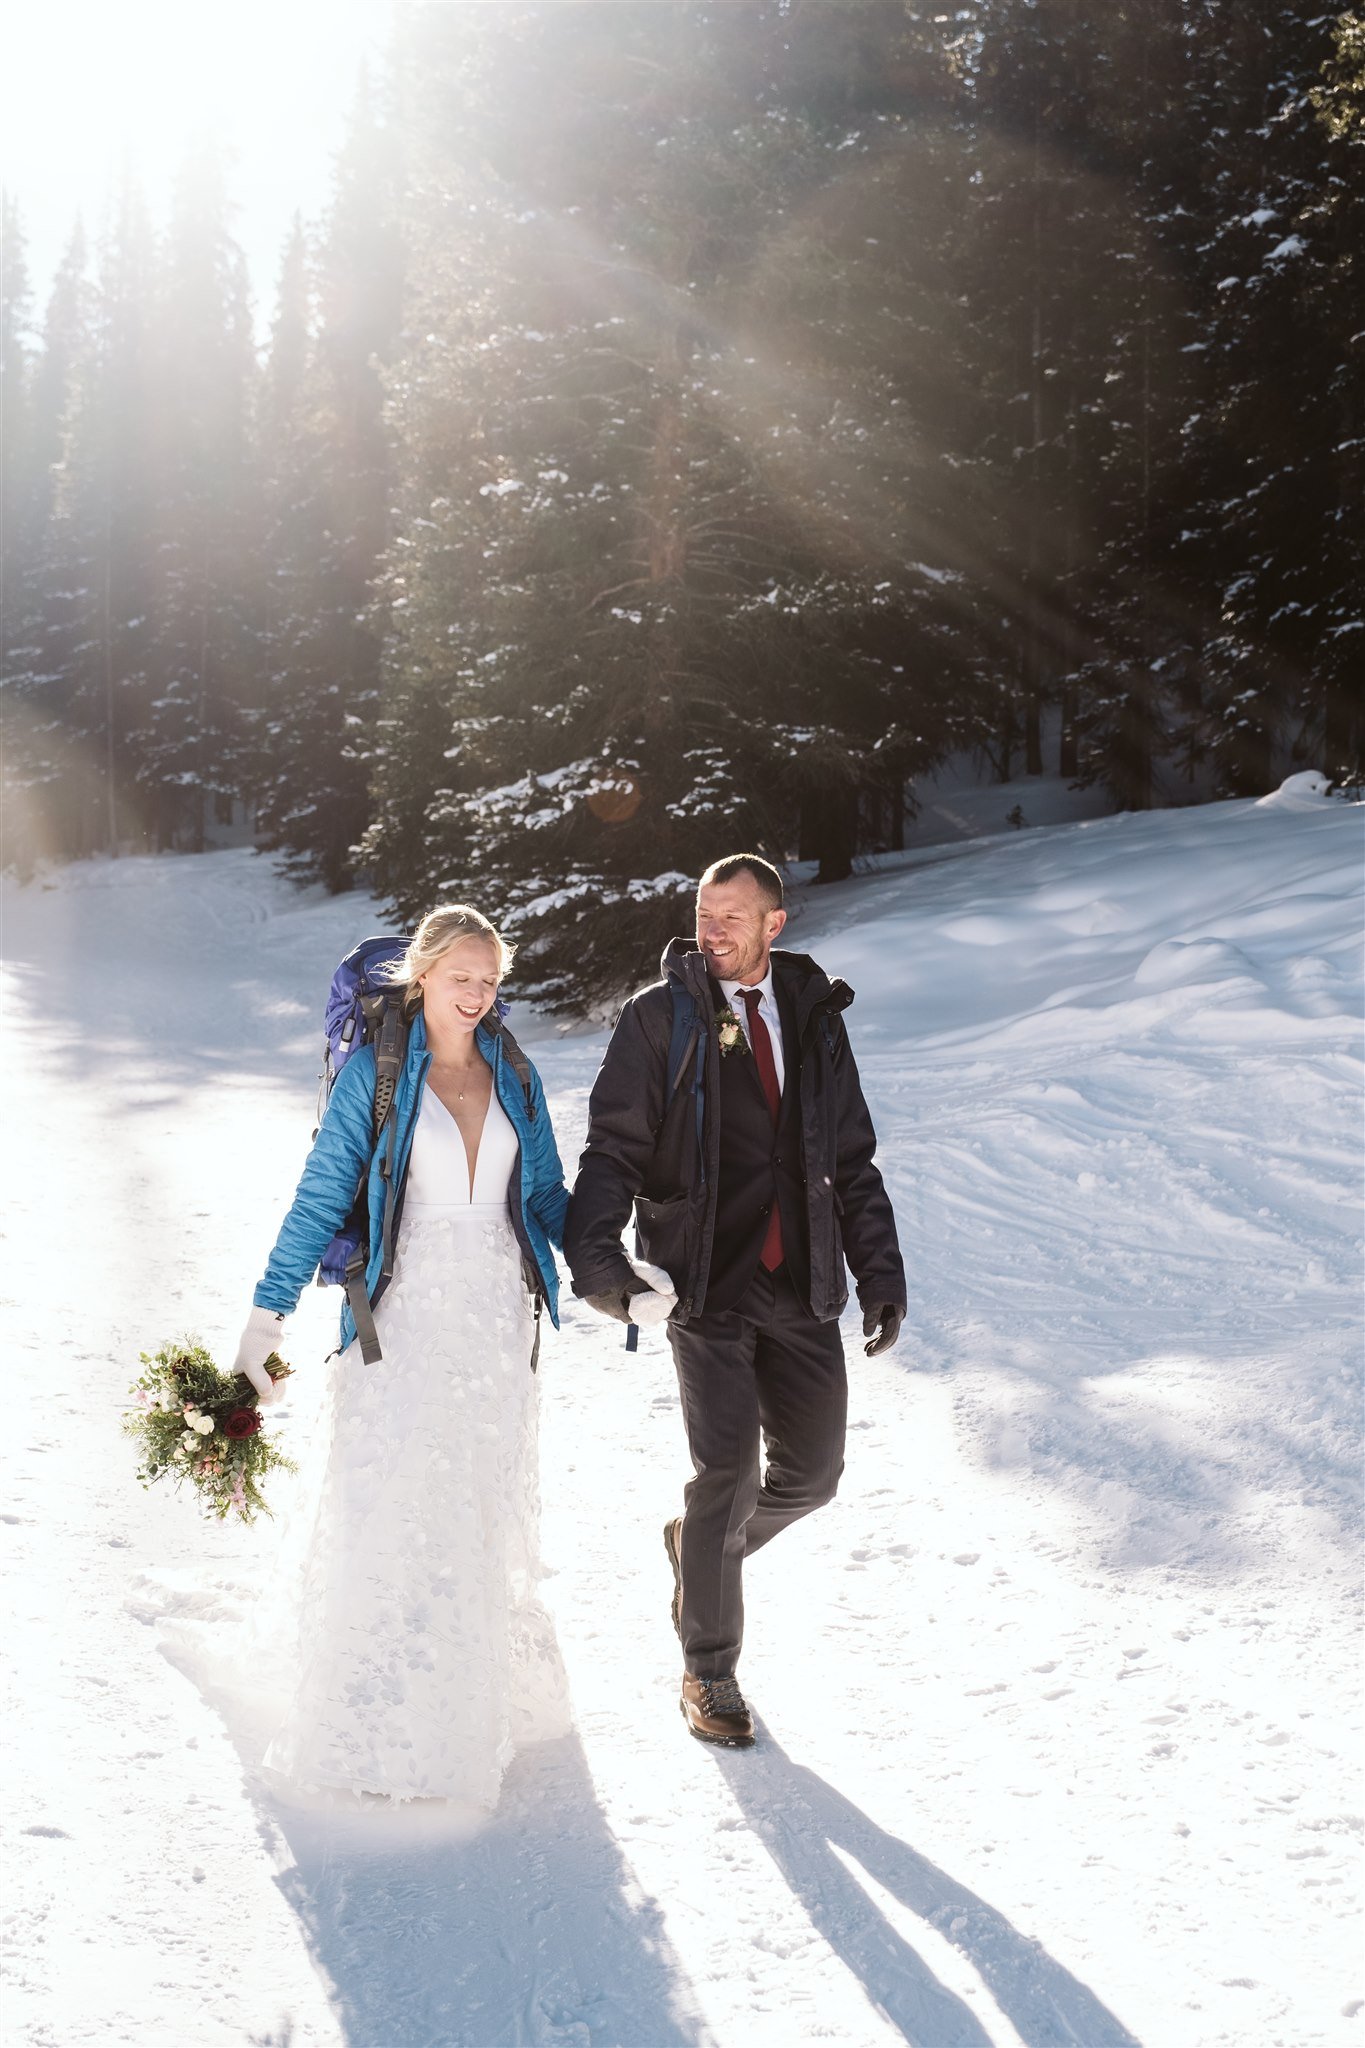  hiking elopement winter mountain snow wedding 